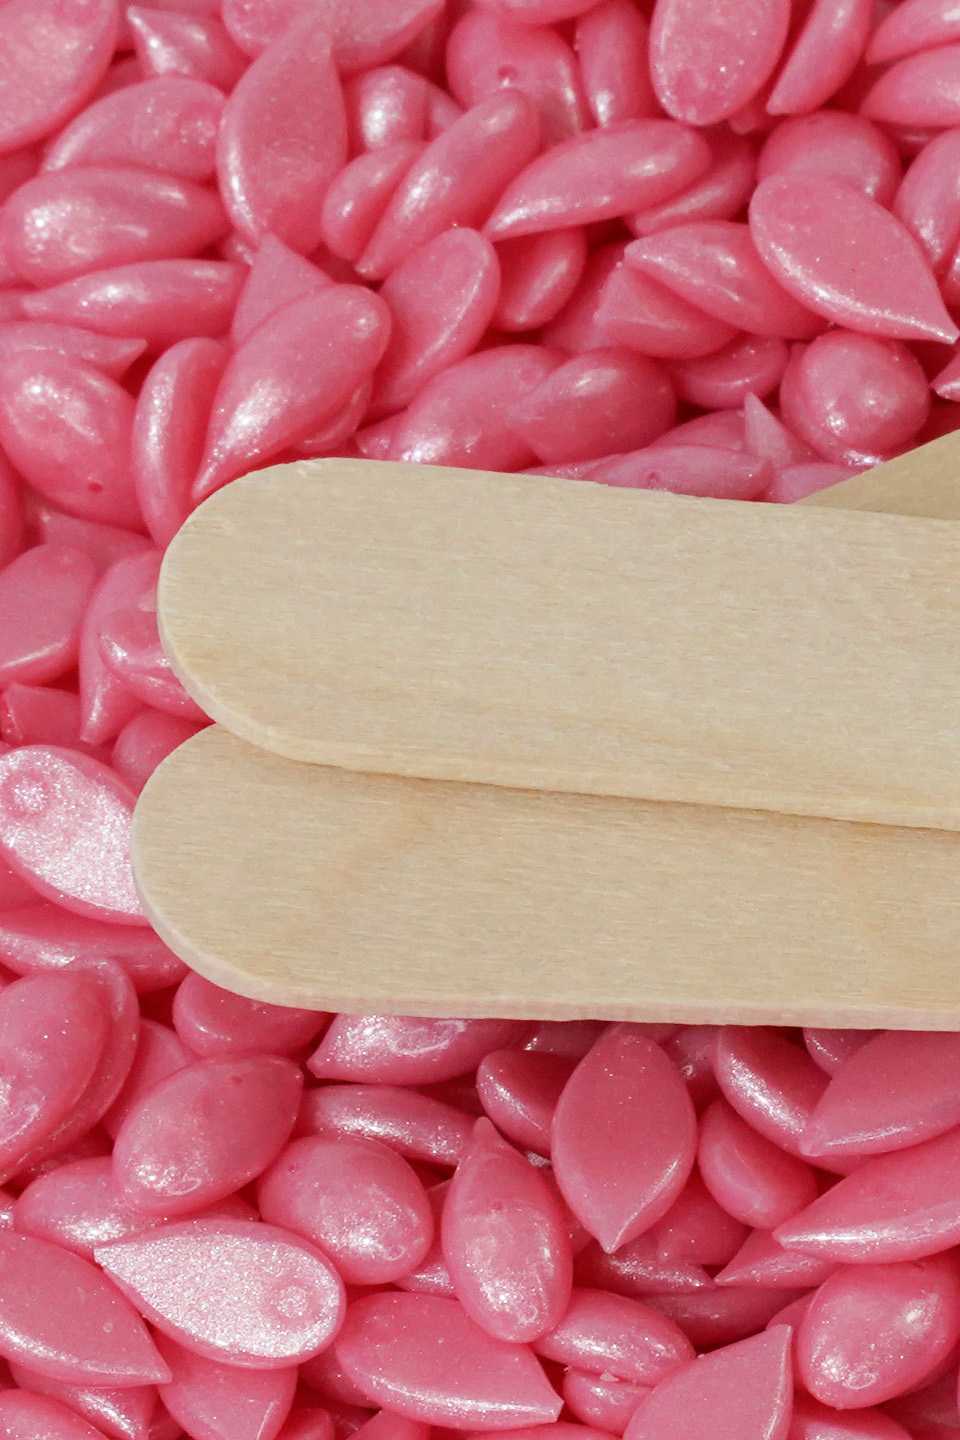 Perle di cera depilatoria Rosa Perla 375 g